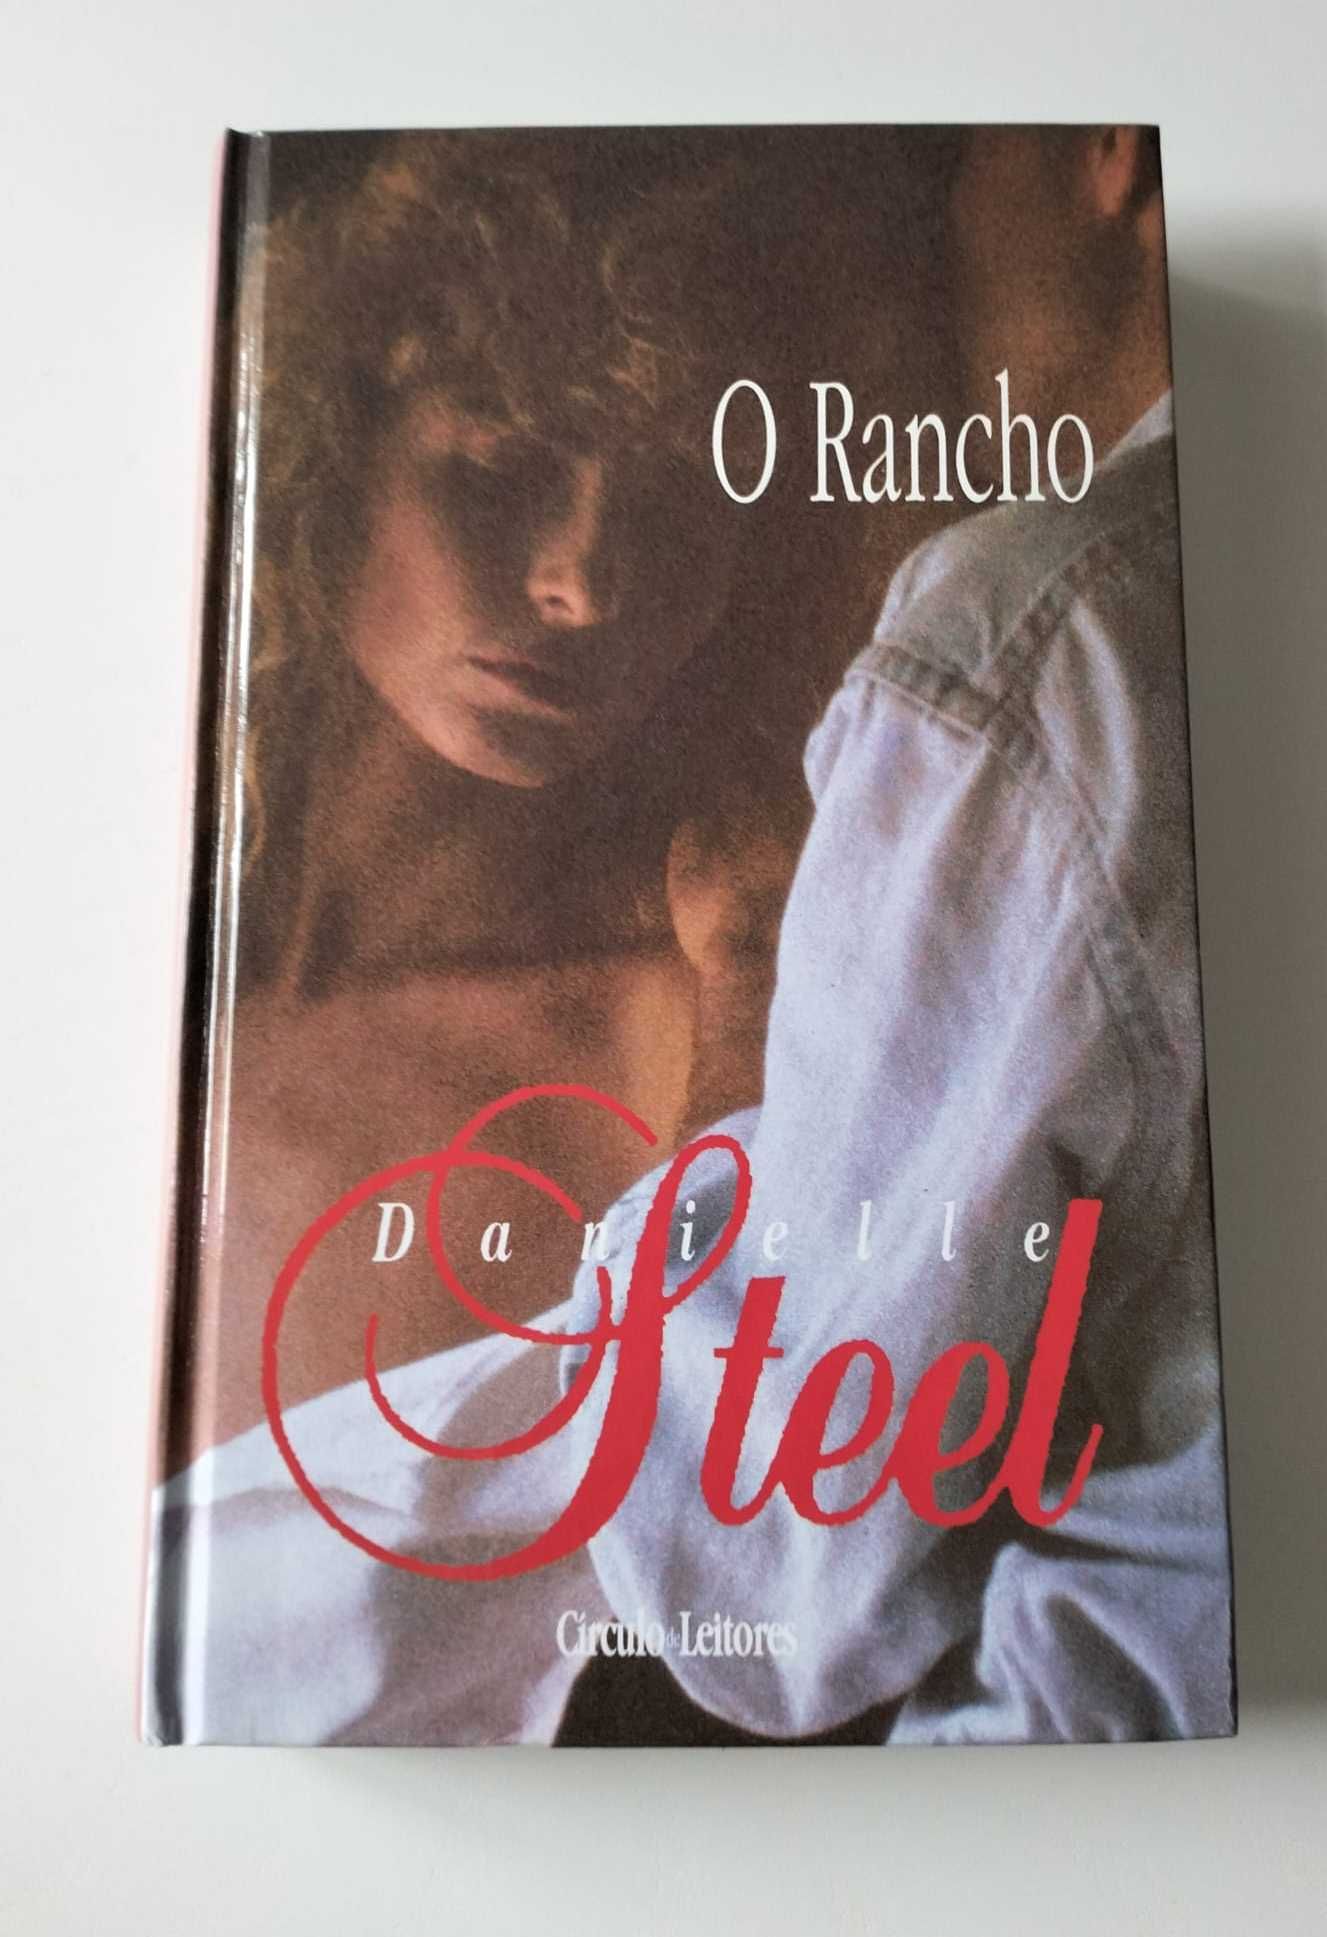 Livro "O Rancho" - Danielle Steel